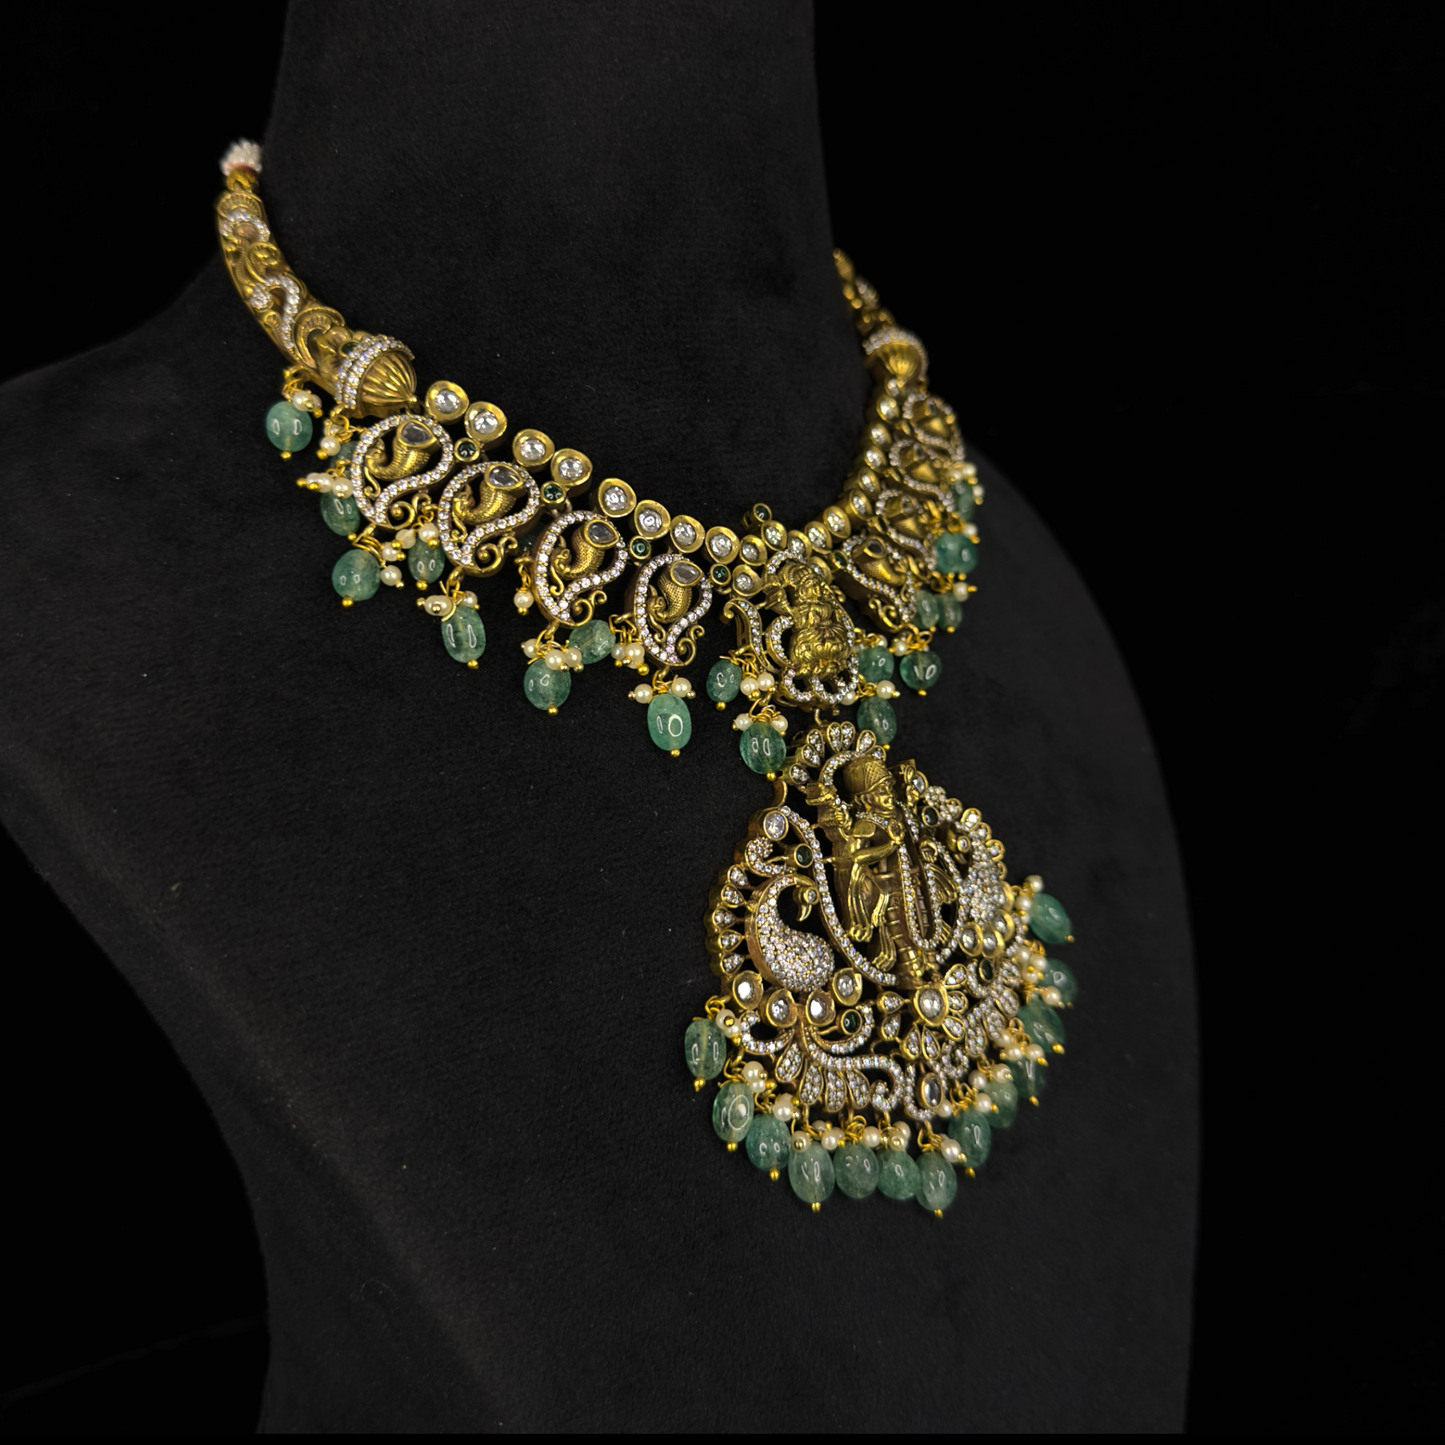 Antique Victorian Necklace Set with God motifs